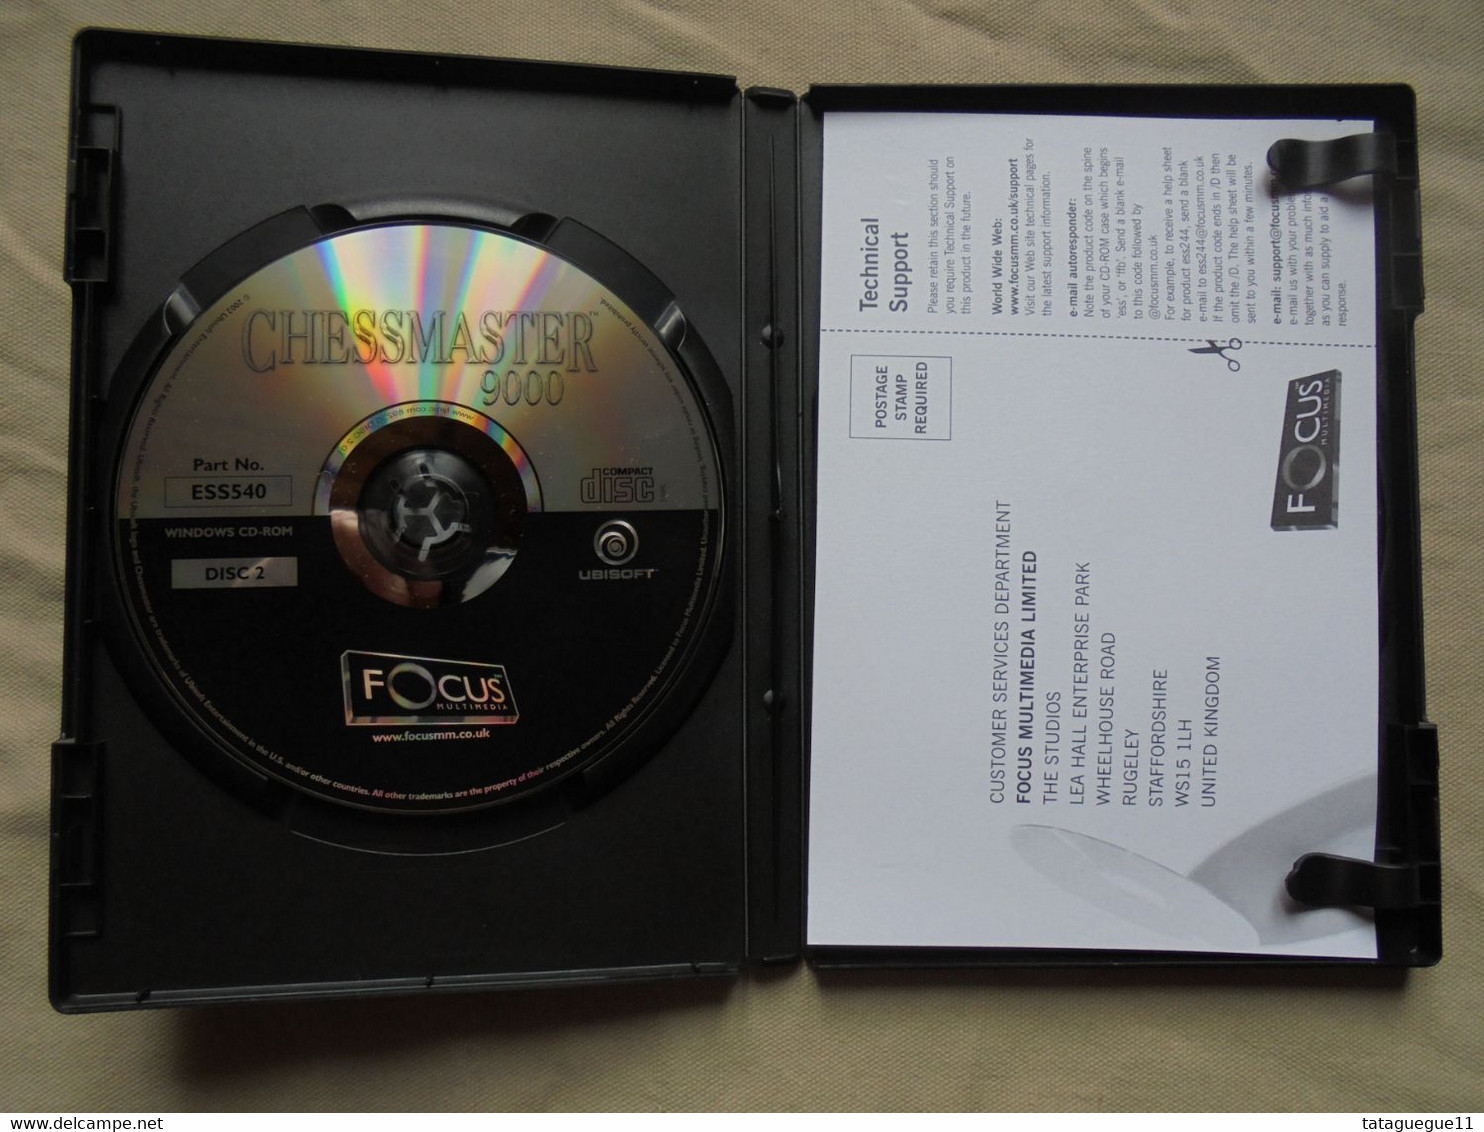 Vintage - Jeu PC CD Rom - Chessmaster 9000 - 2006 - Jeux PC